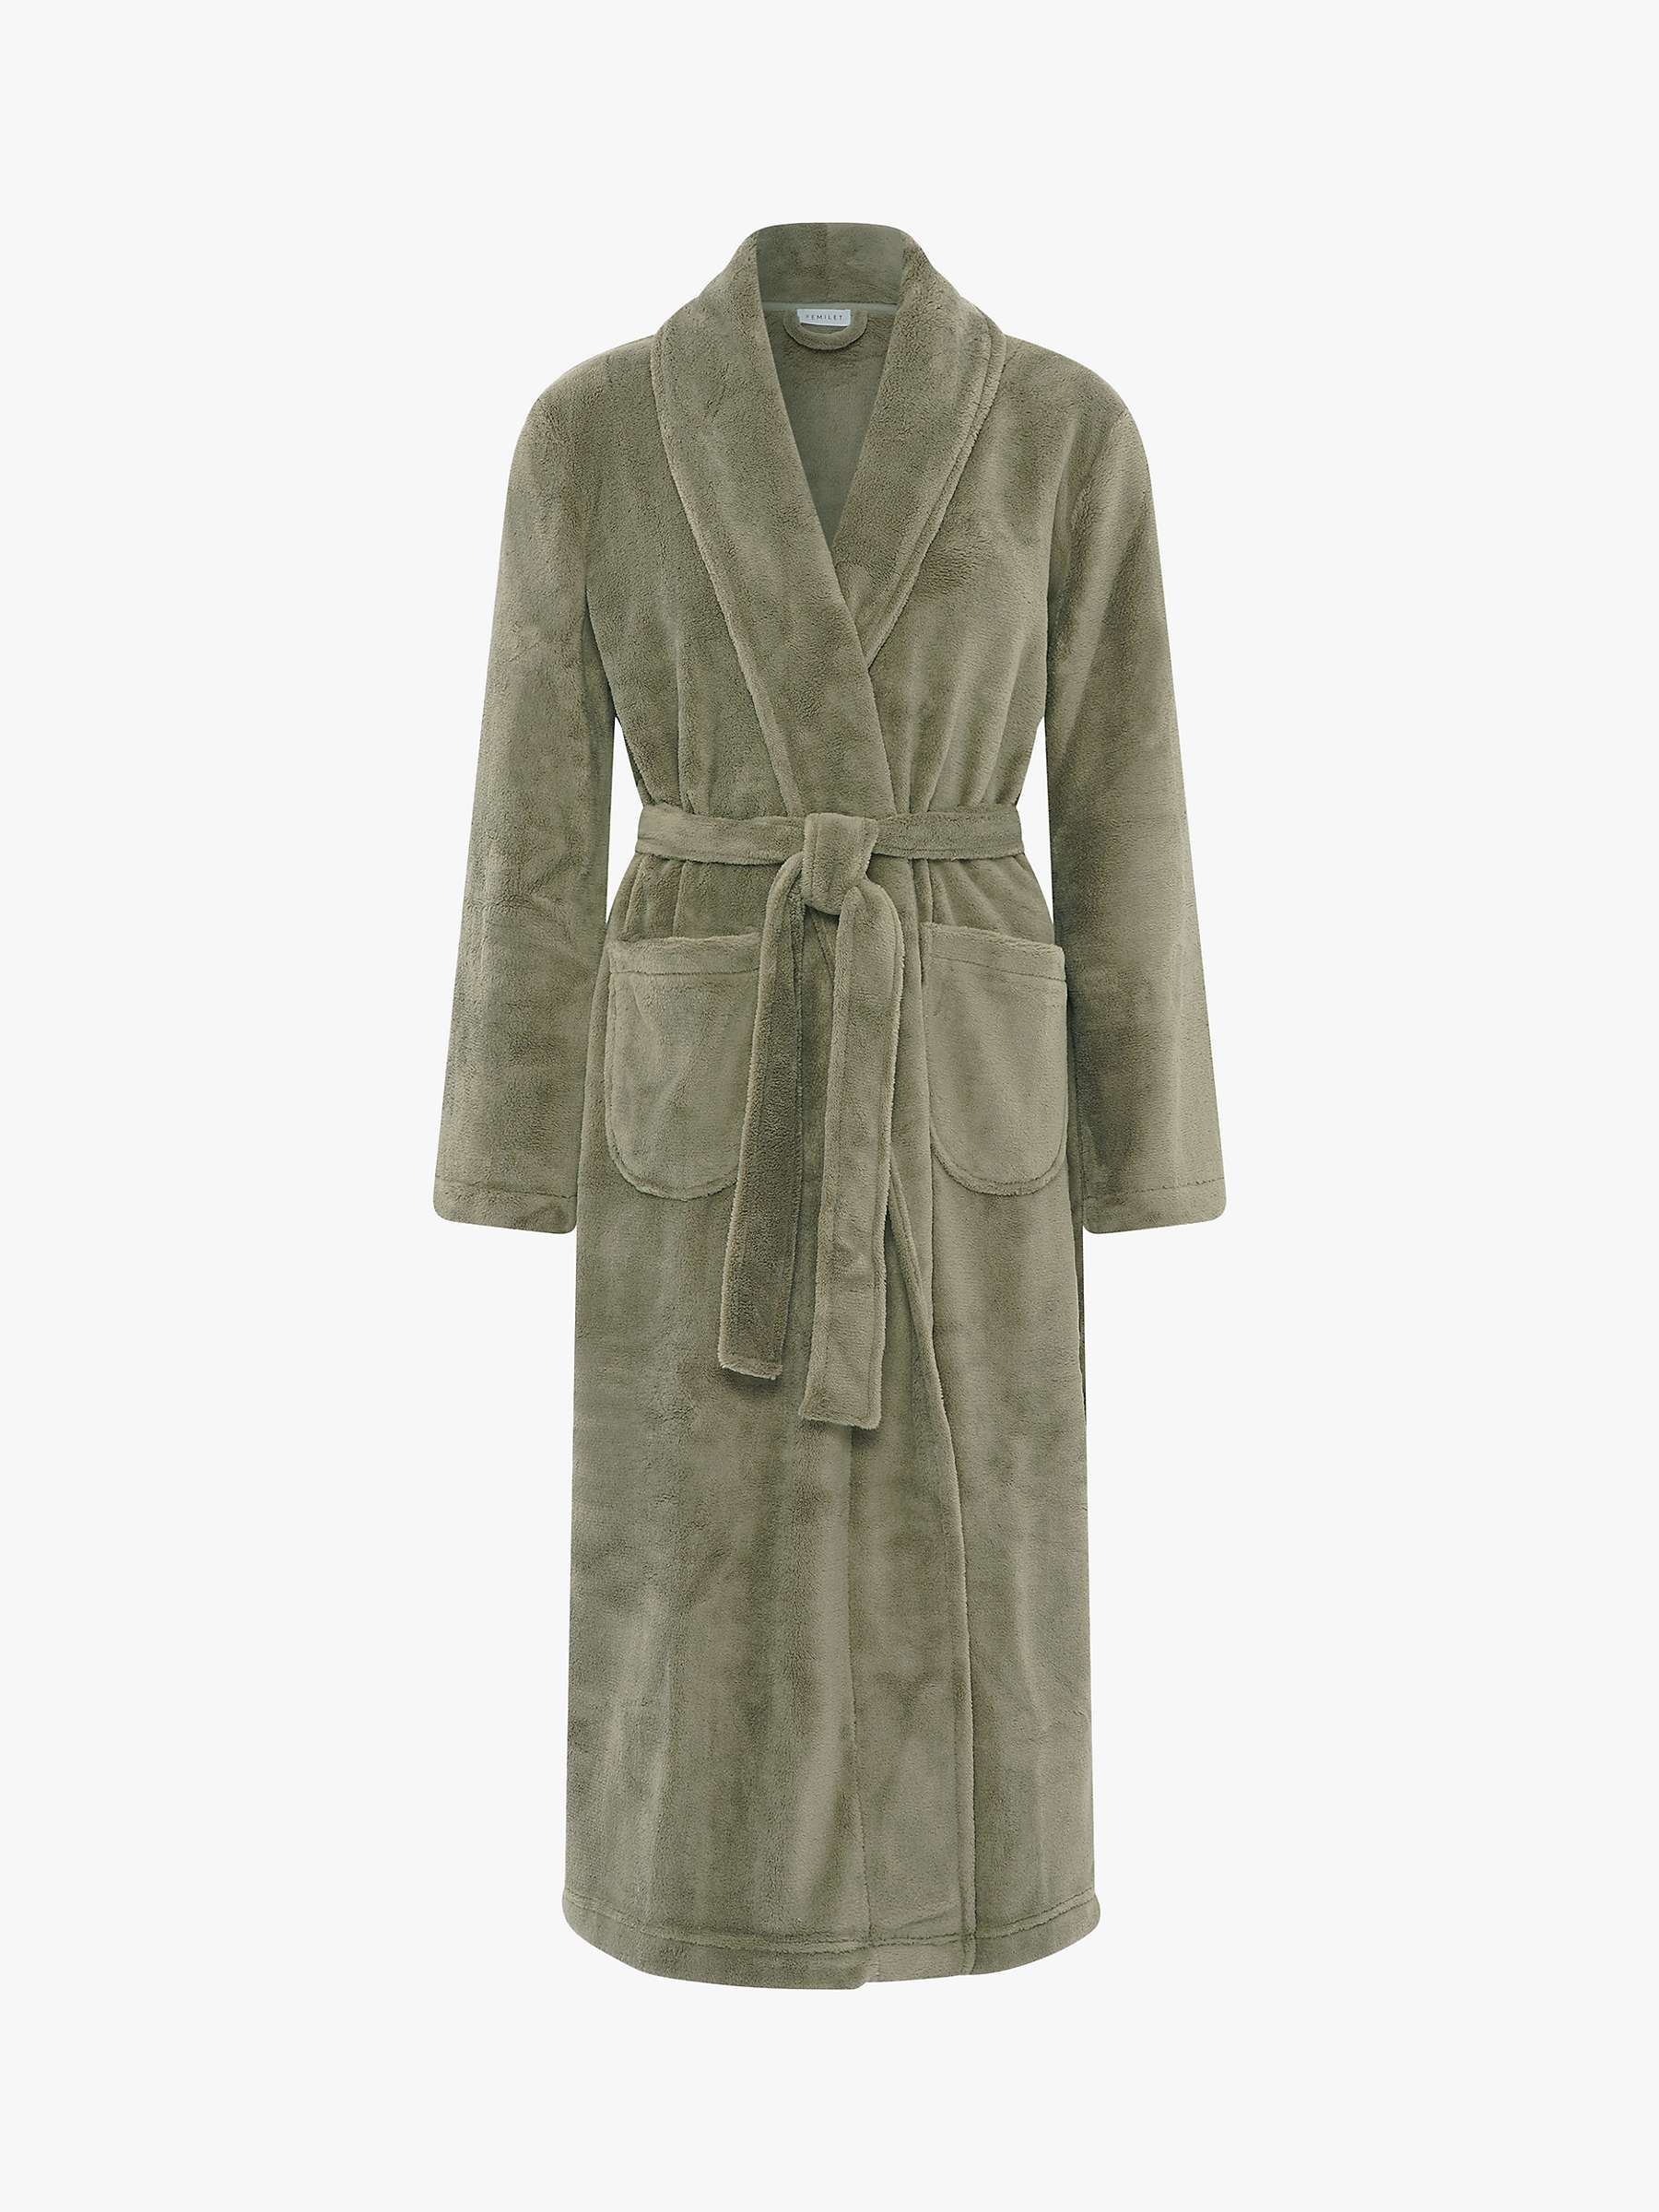 Femilet Teddy Soft Feel Dressing Gown, Khaki Green at John Lewis & Partners